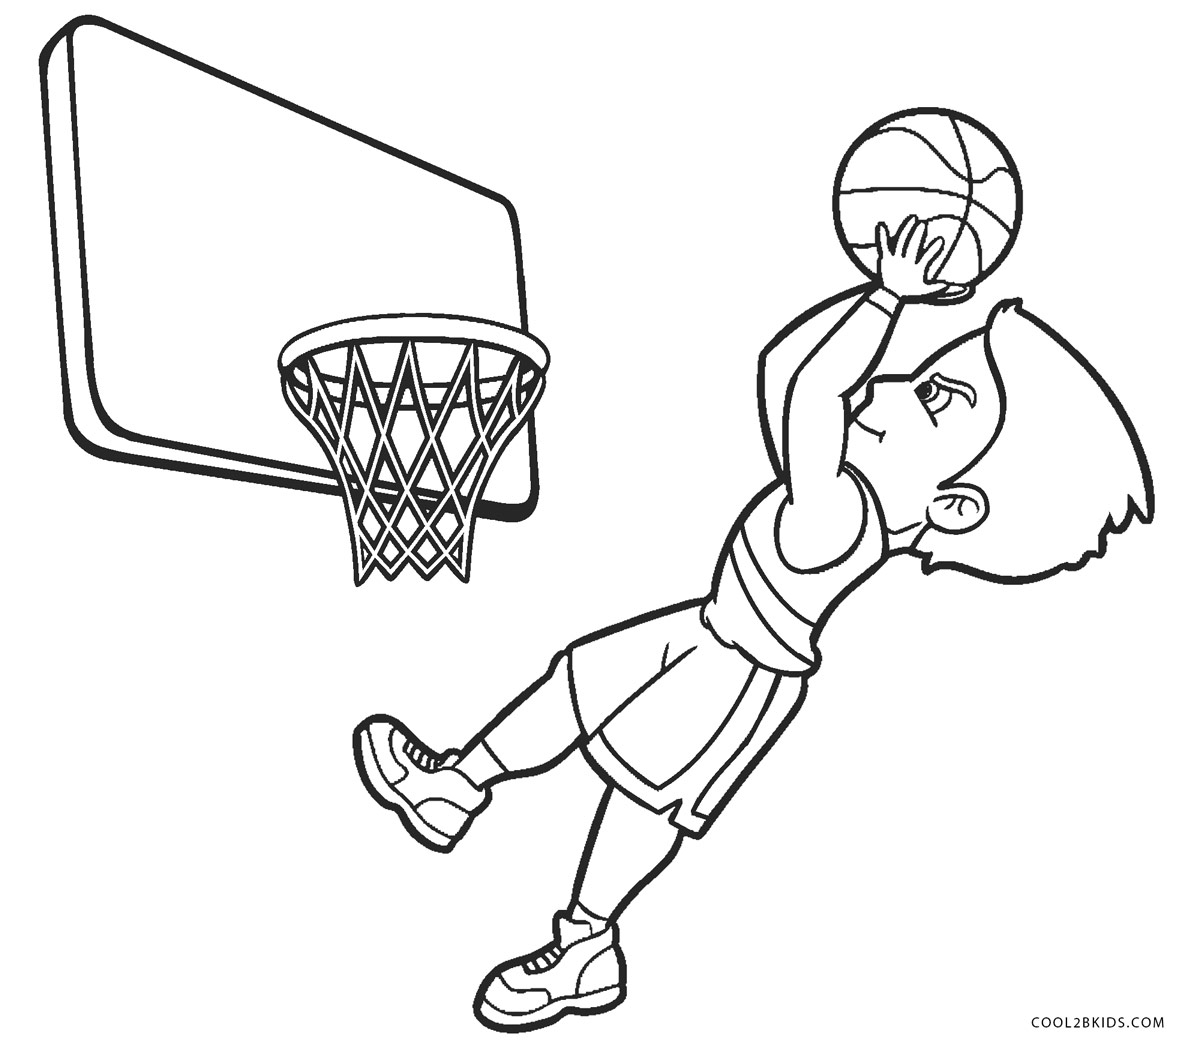 Dibujos de Deportes para colorear - Imagenes para imprimir gratis -  Cool2bKids